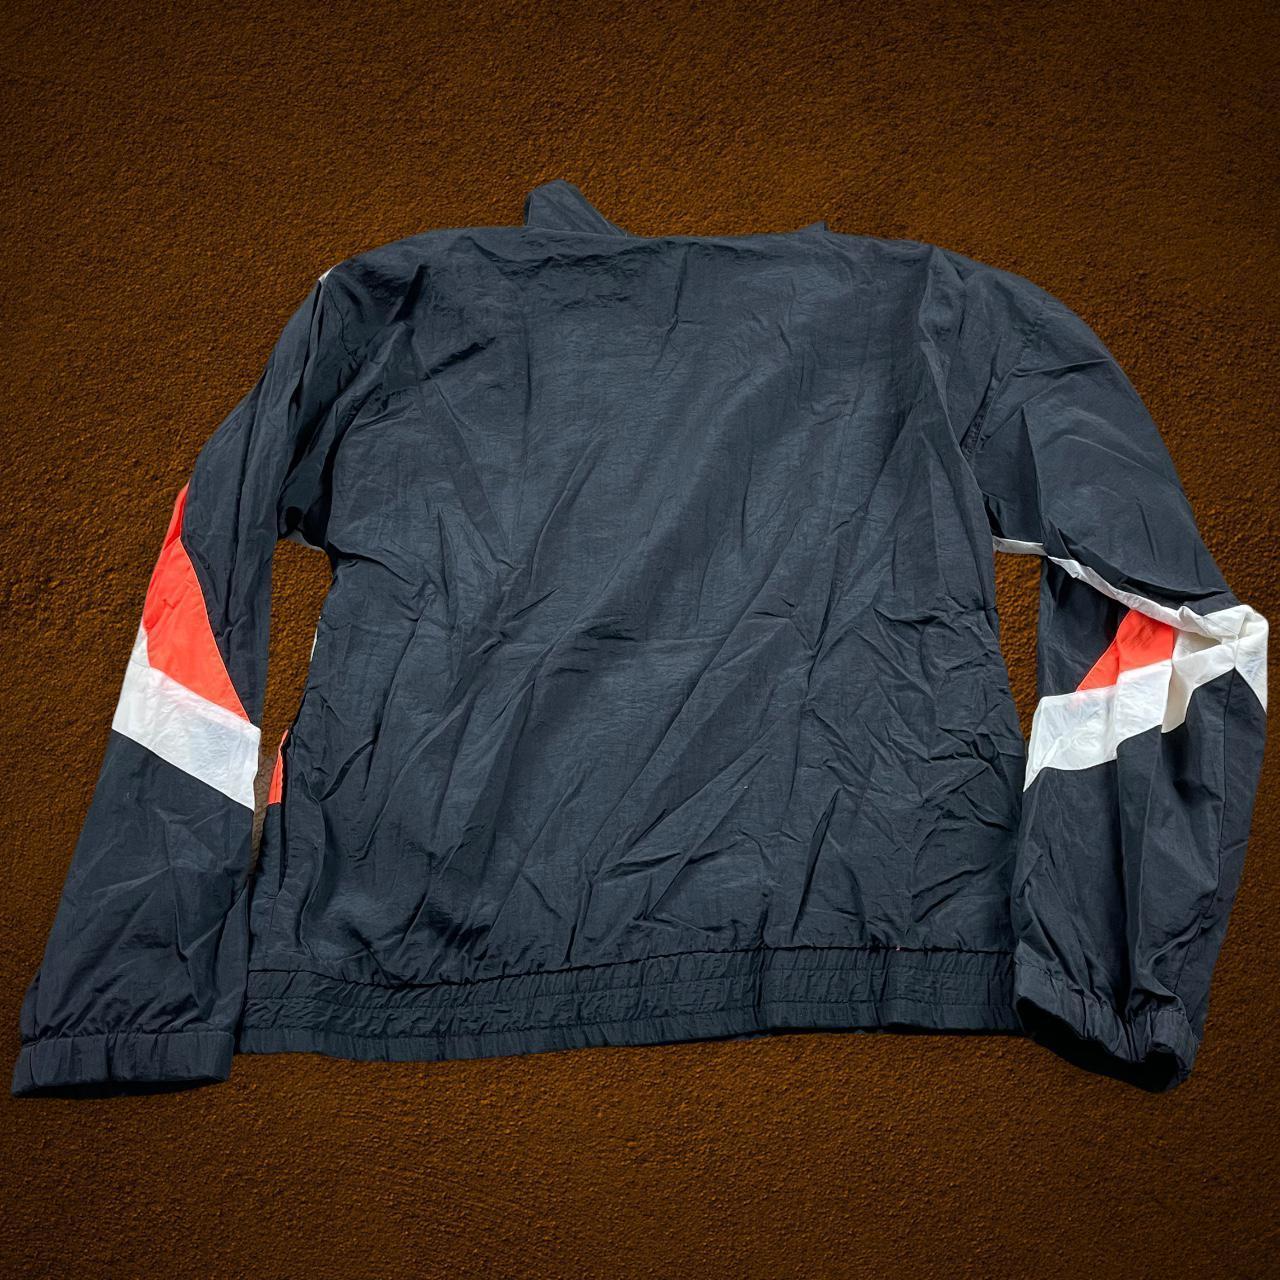 Product Image 2 - Vintage pony brand windbreaker jacket